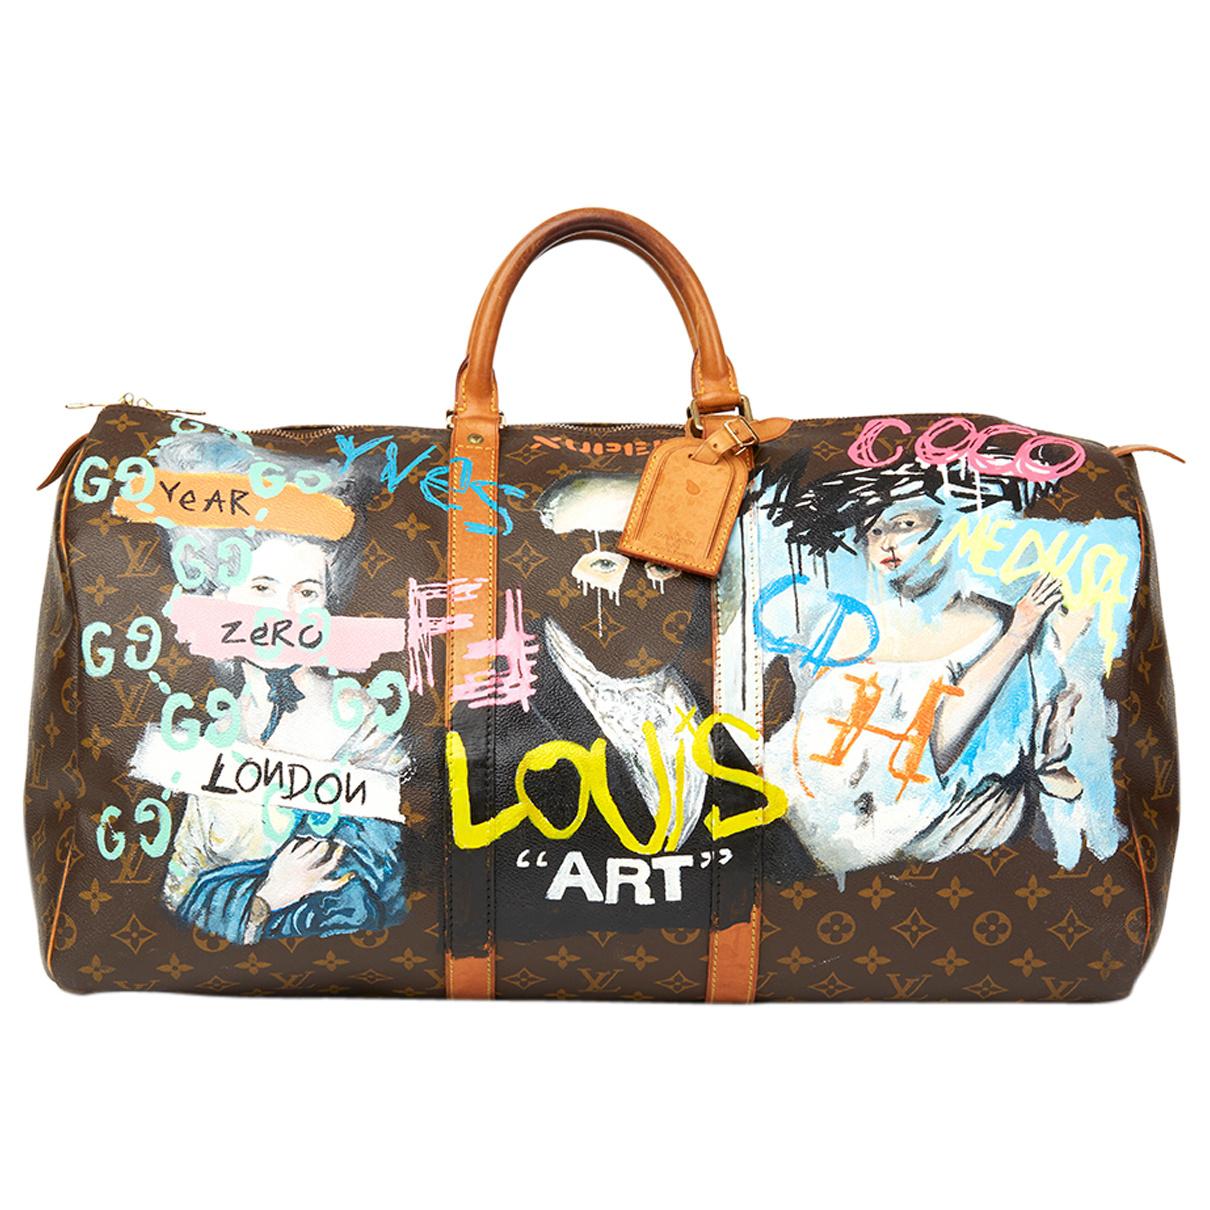 Lyst - Louis Vuitton Keepall Cloth Travel Bag in Brown